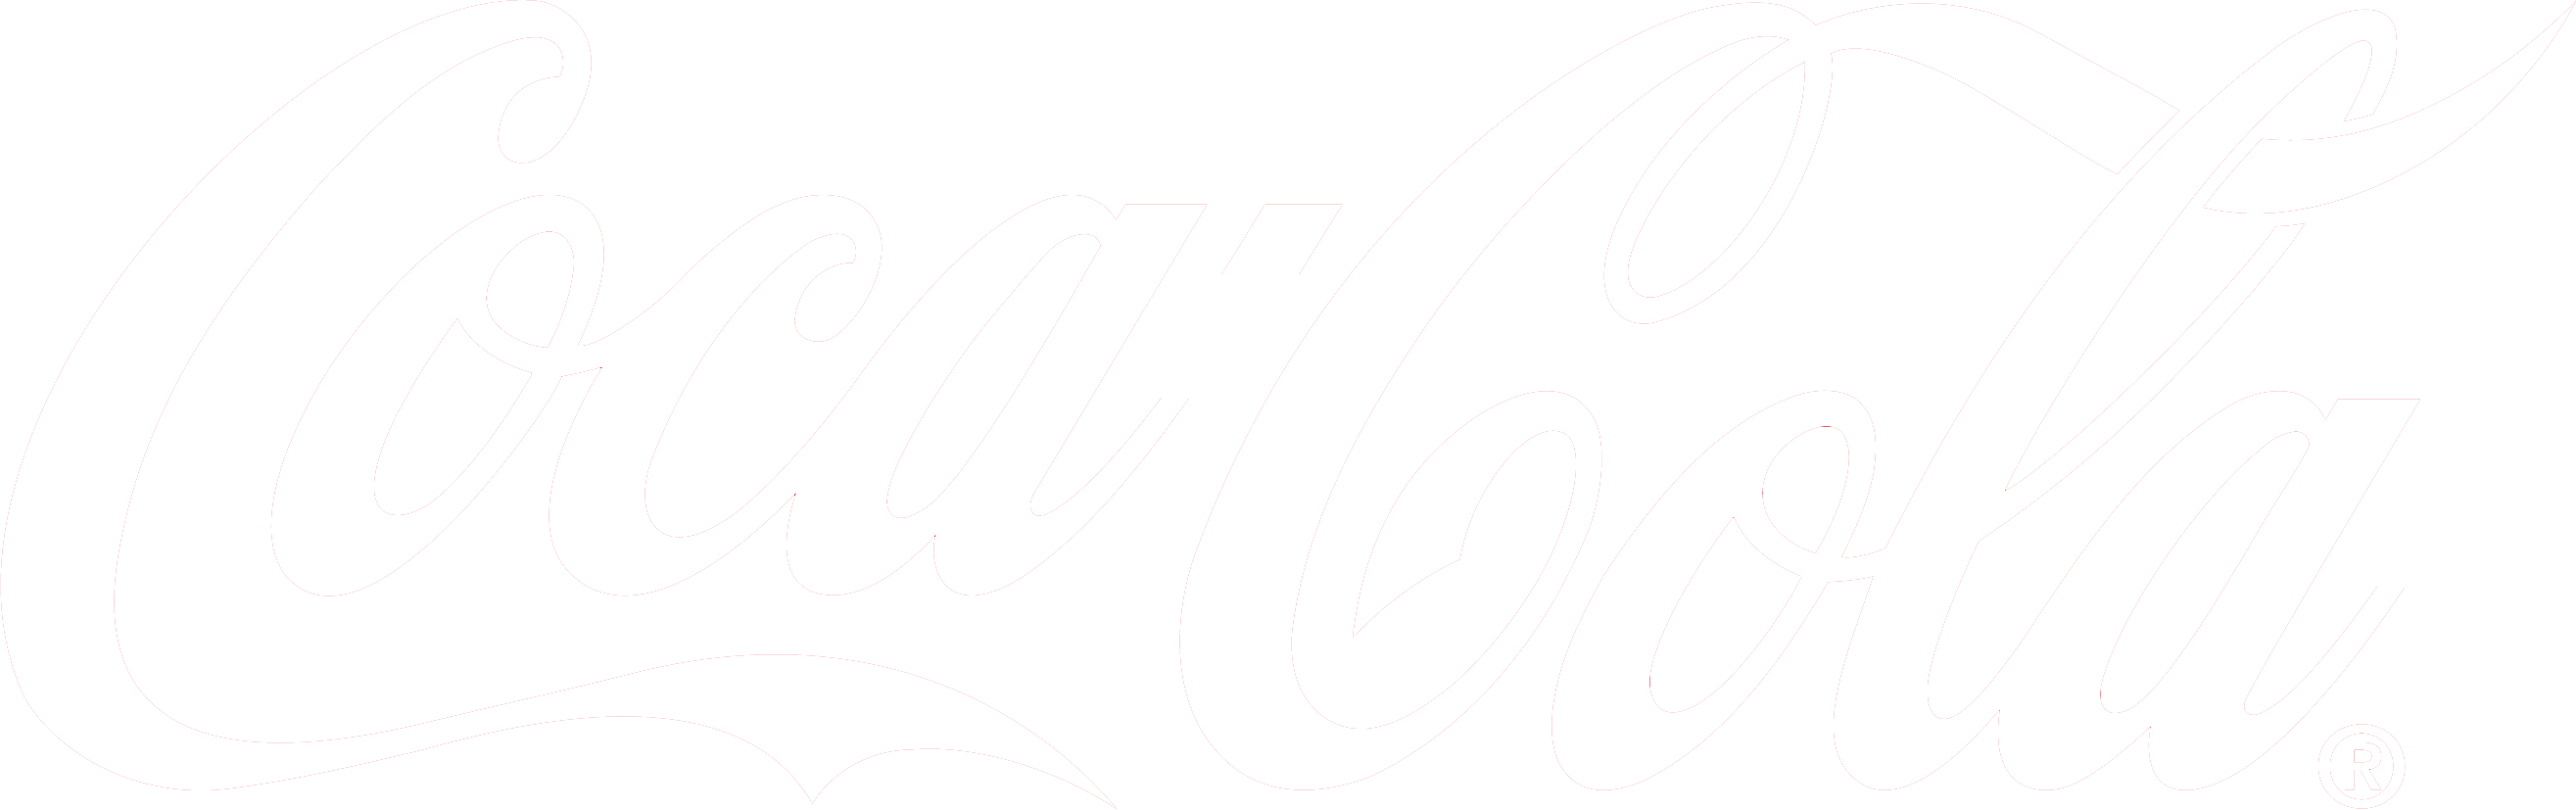 Coca-Cola Zero Logo - Coca cola zero logo png 3 » PNG Image